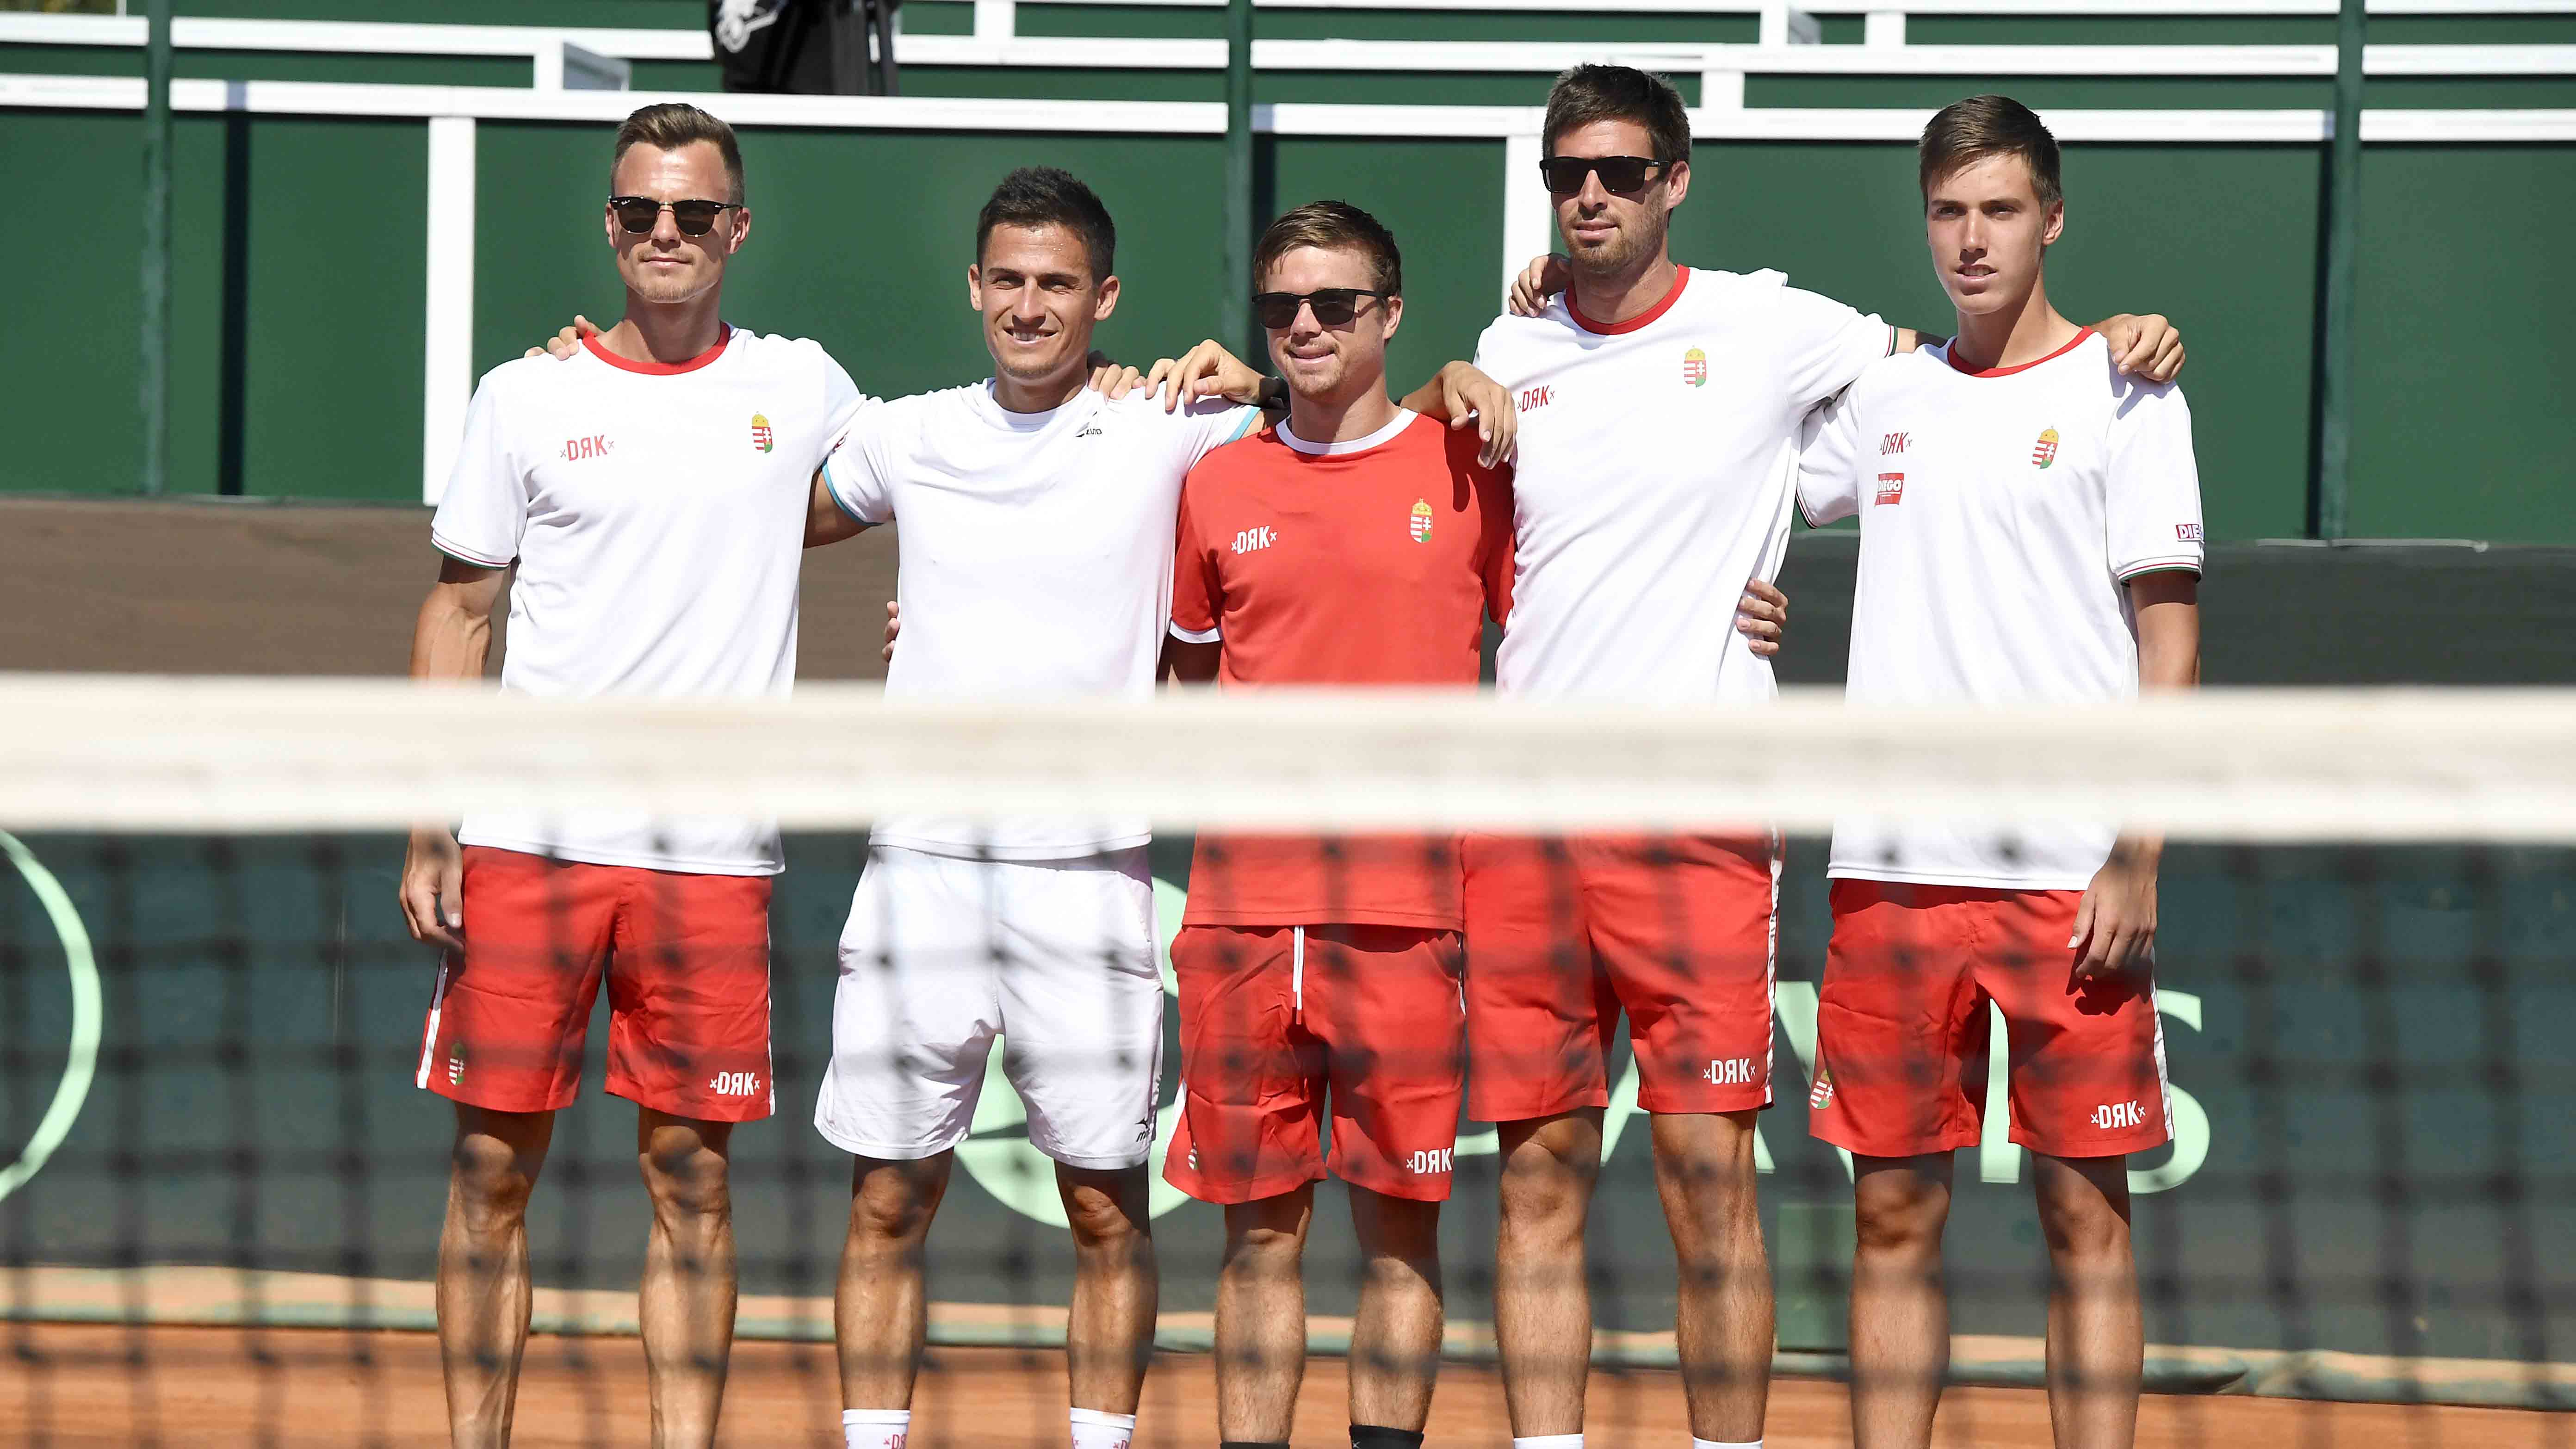 Hungarian Balazs triumphs in Hungary-Ukraine Davis Cup play-off